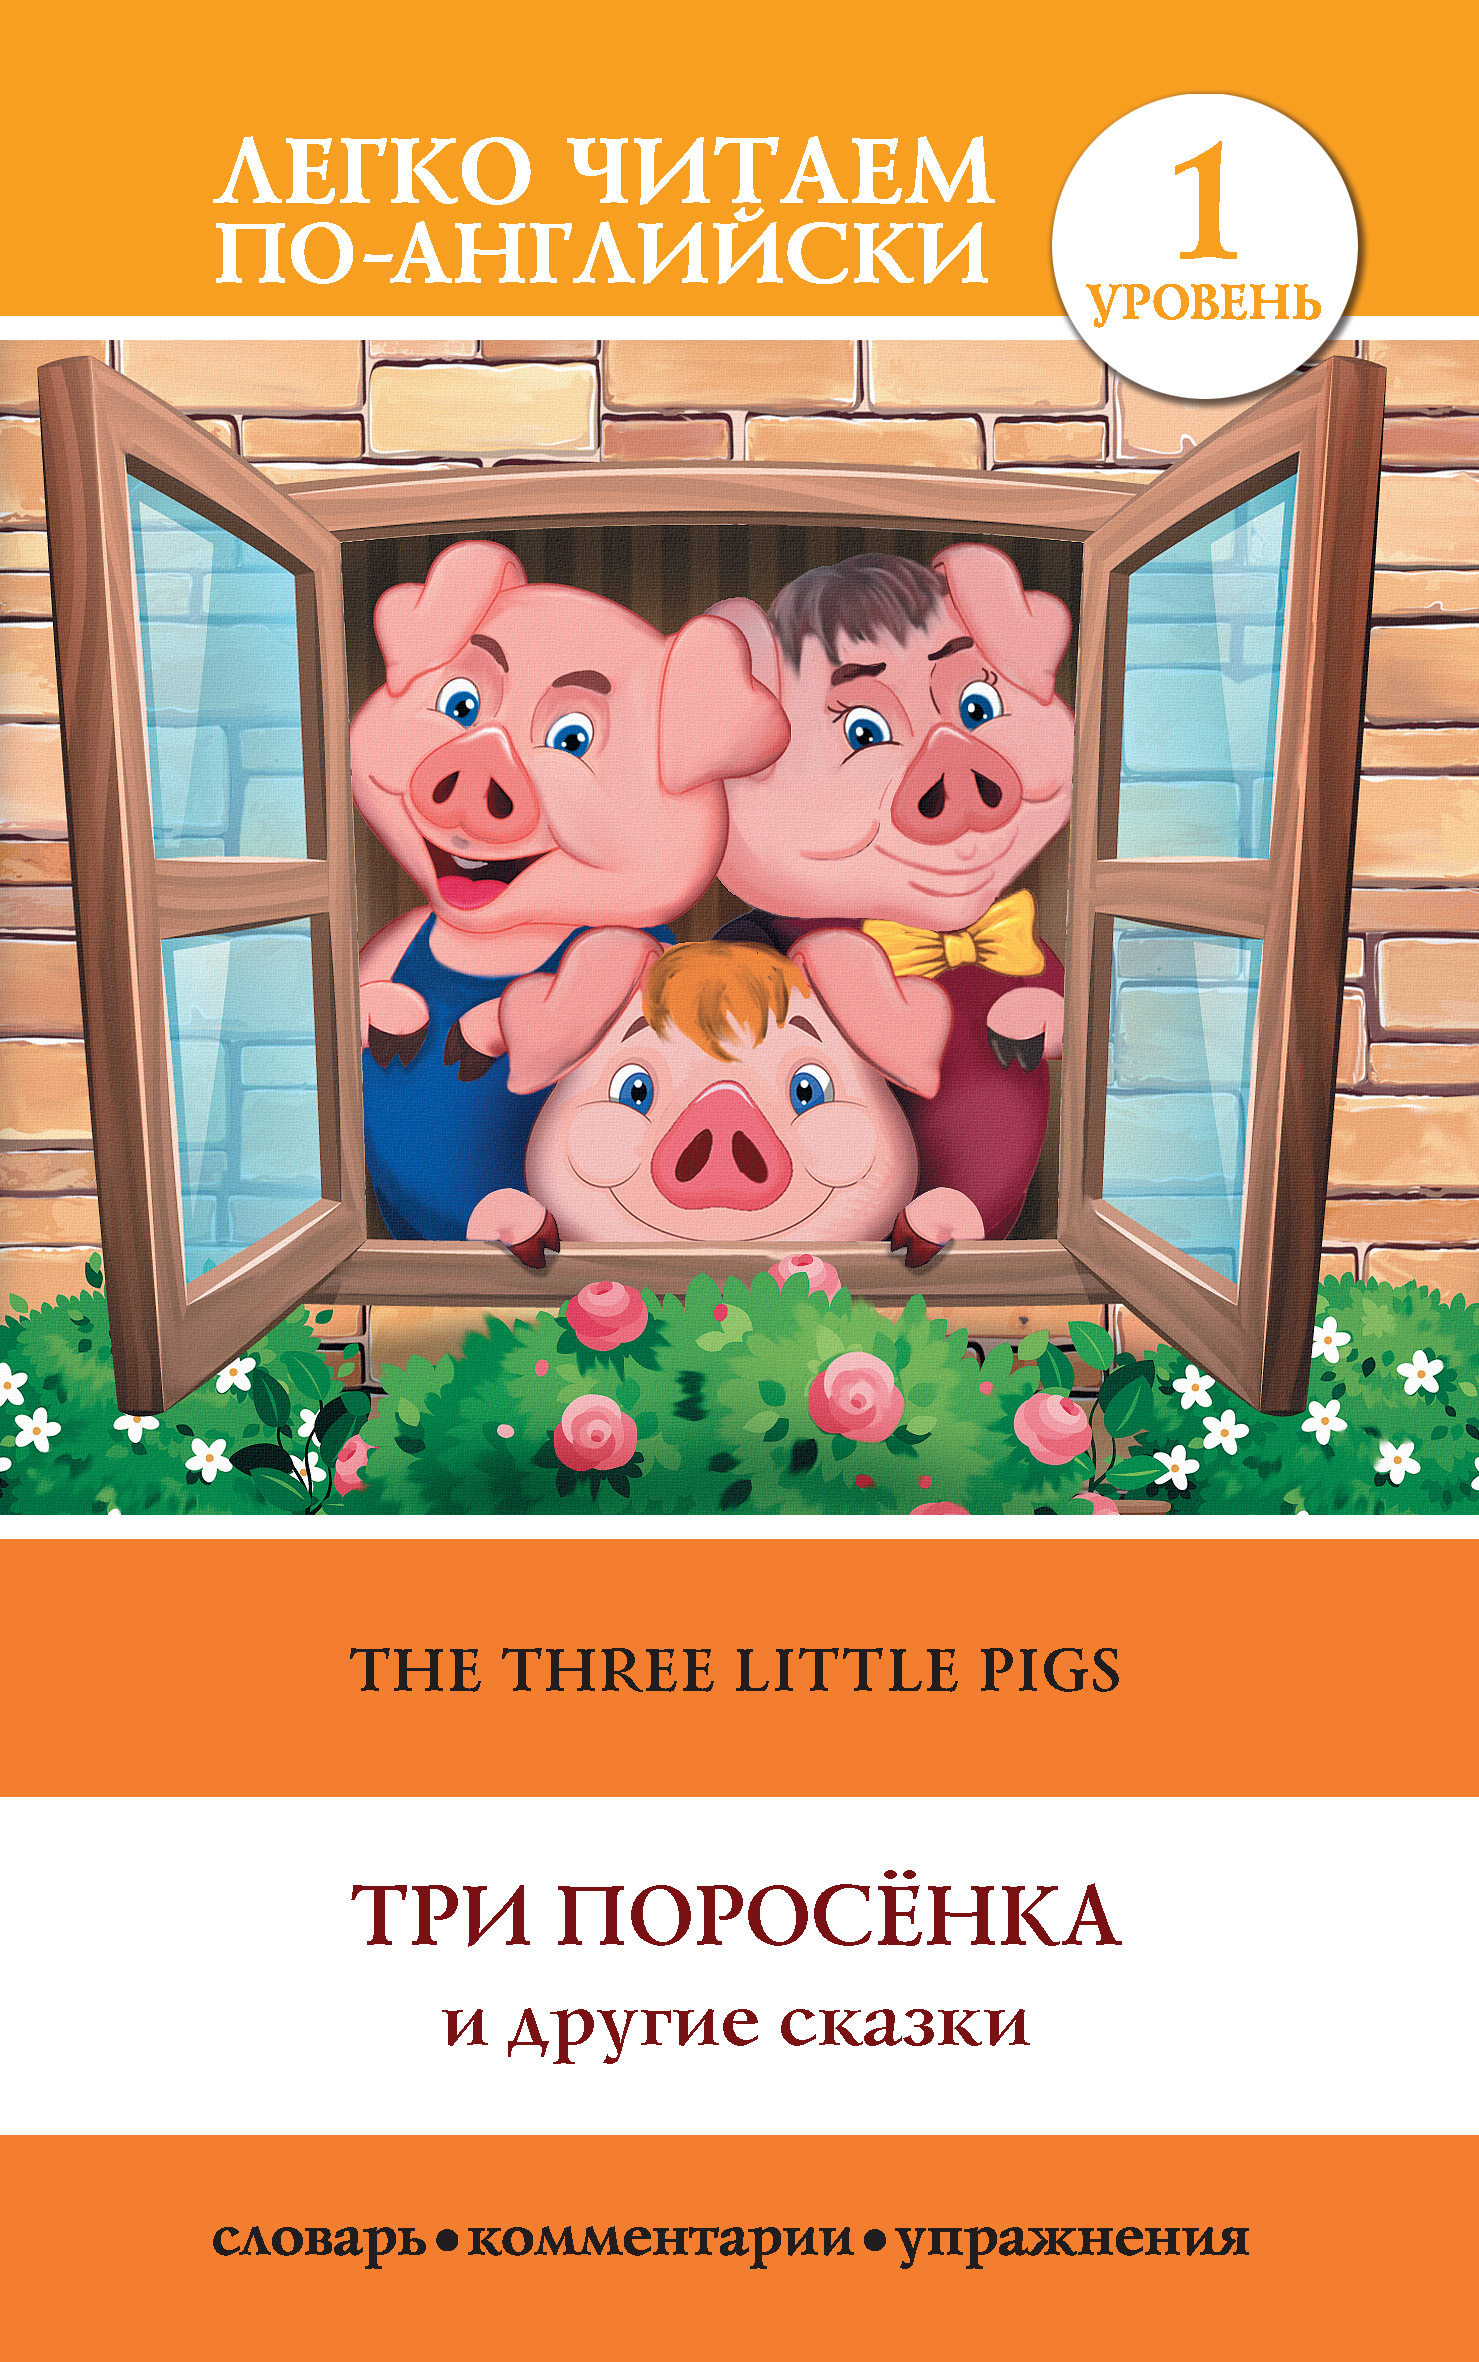 The Three Little Pigs /Три поросенка и другие сказки